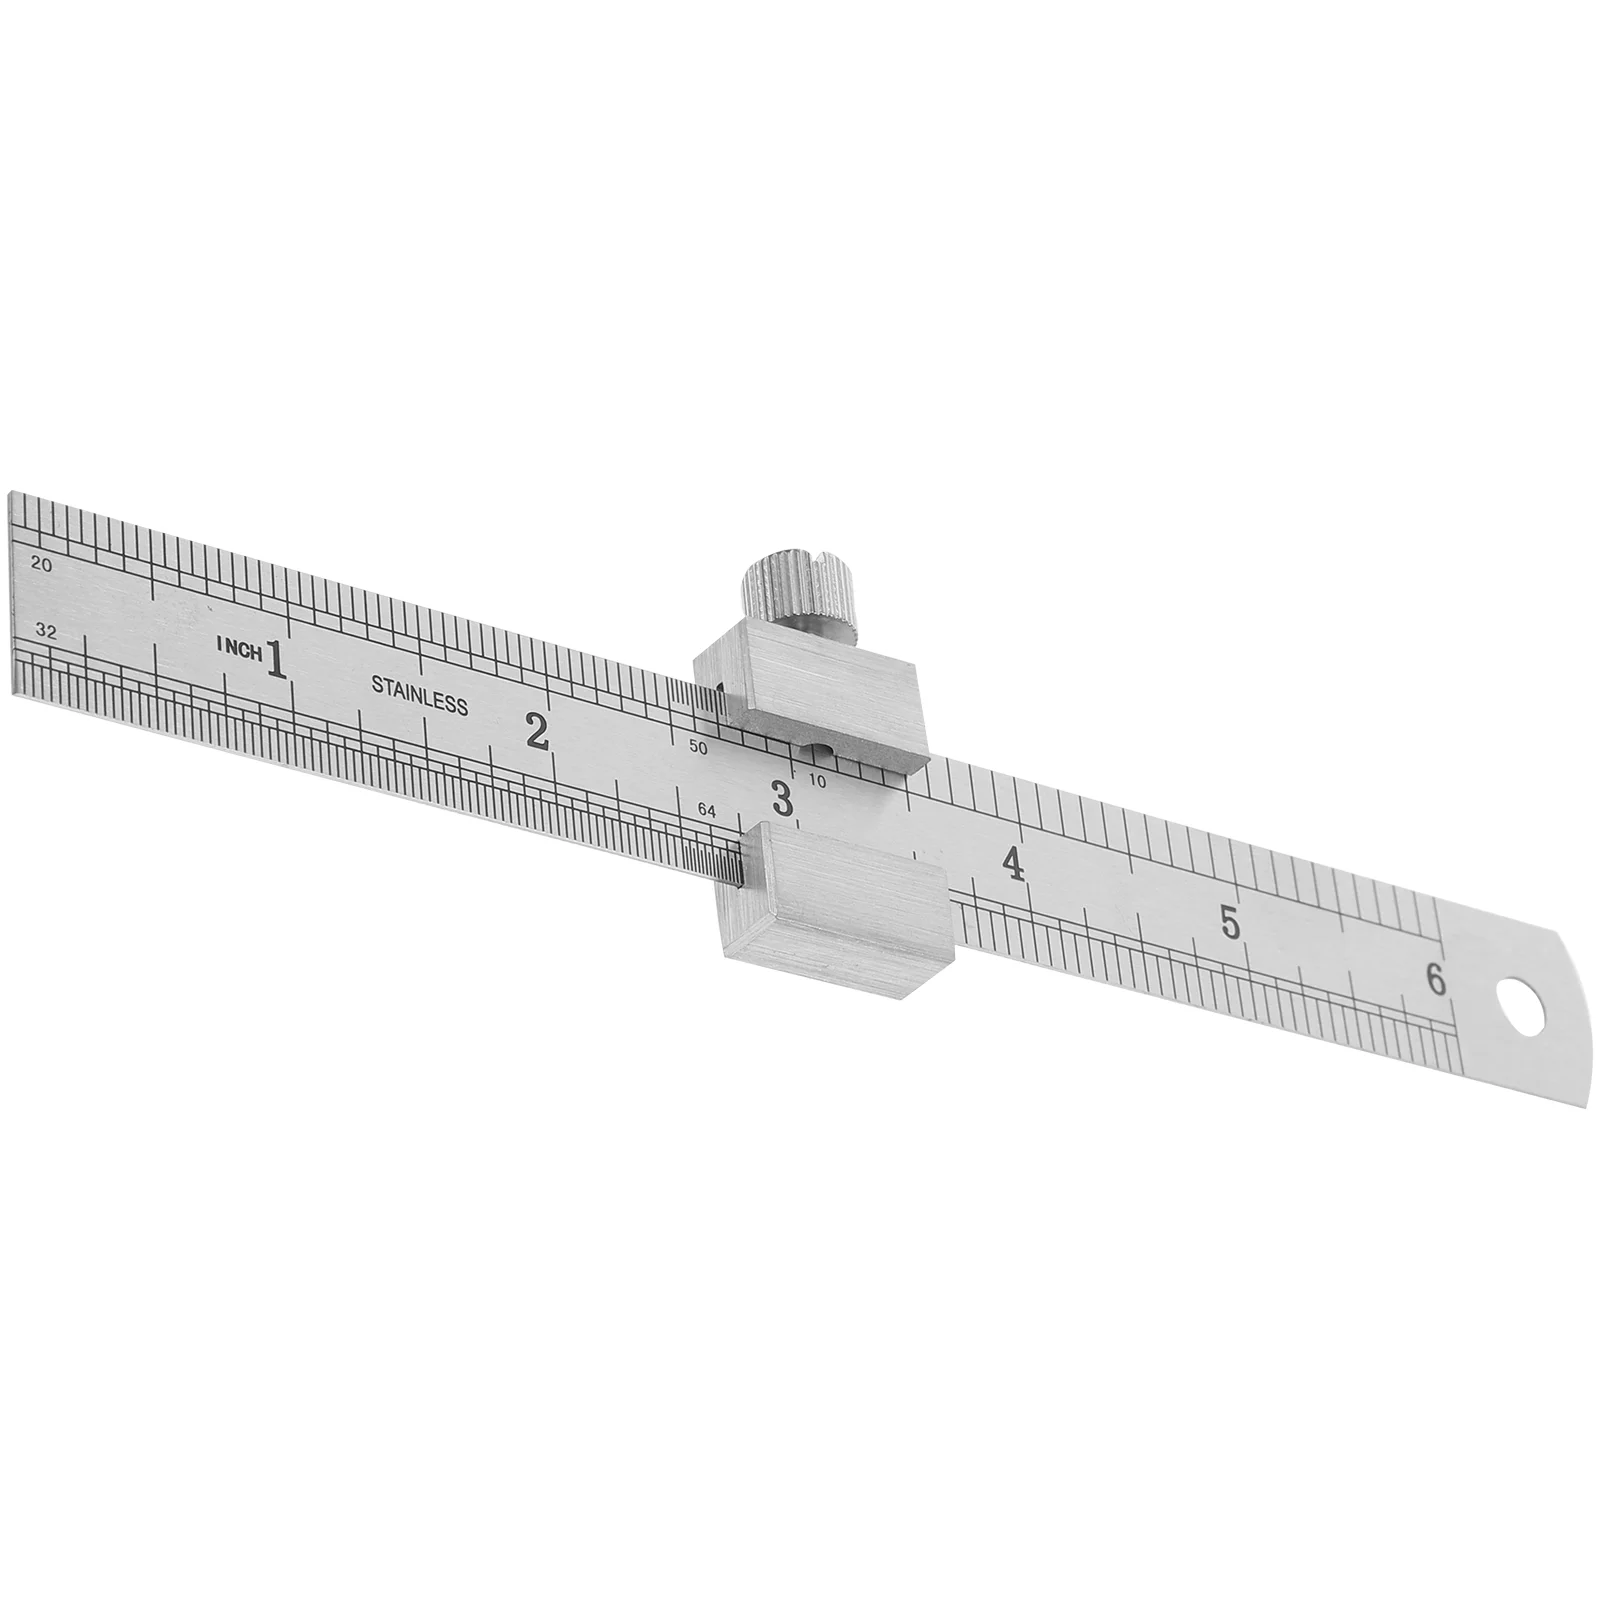 

Iplusmile Woodworking Ruler Slide Stop 6 Inch 15Cm Stainless Steel Precision Pocket Ruler Measuring Scribing Rulers Measure